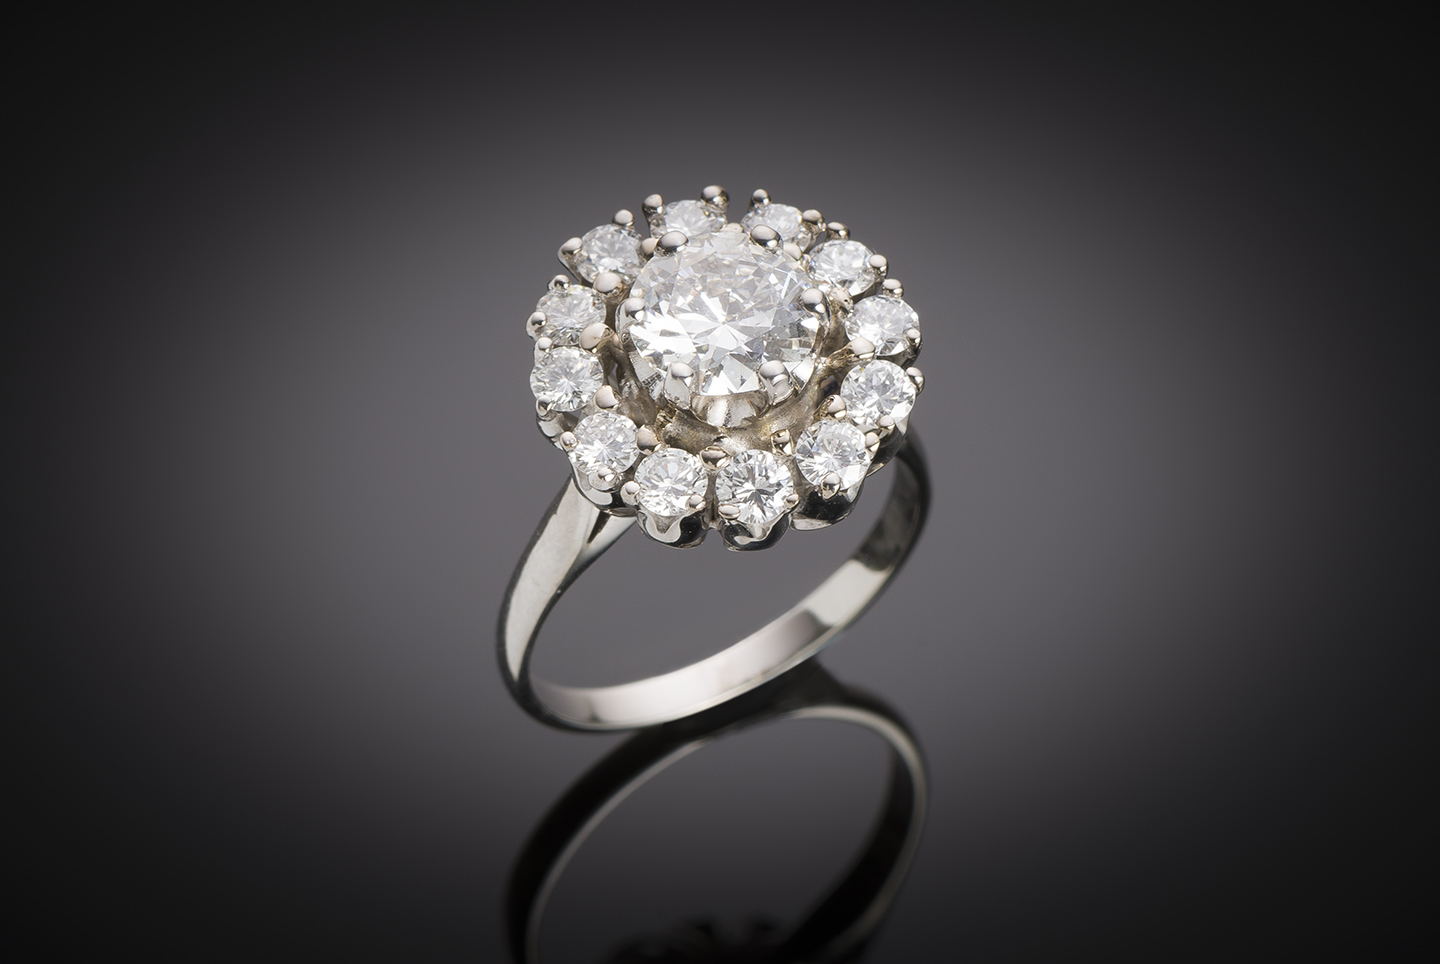 Floating Center Engagement Ring - Diamond Rings - Engagement Rings